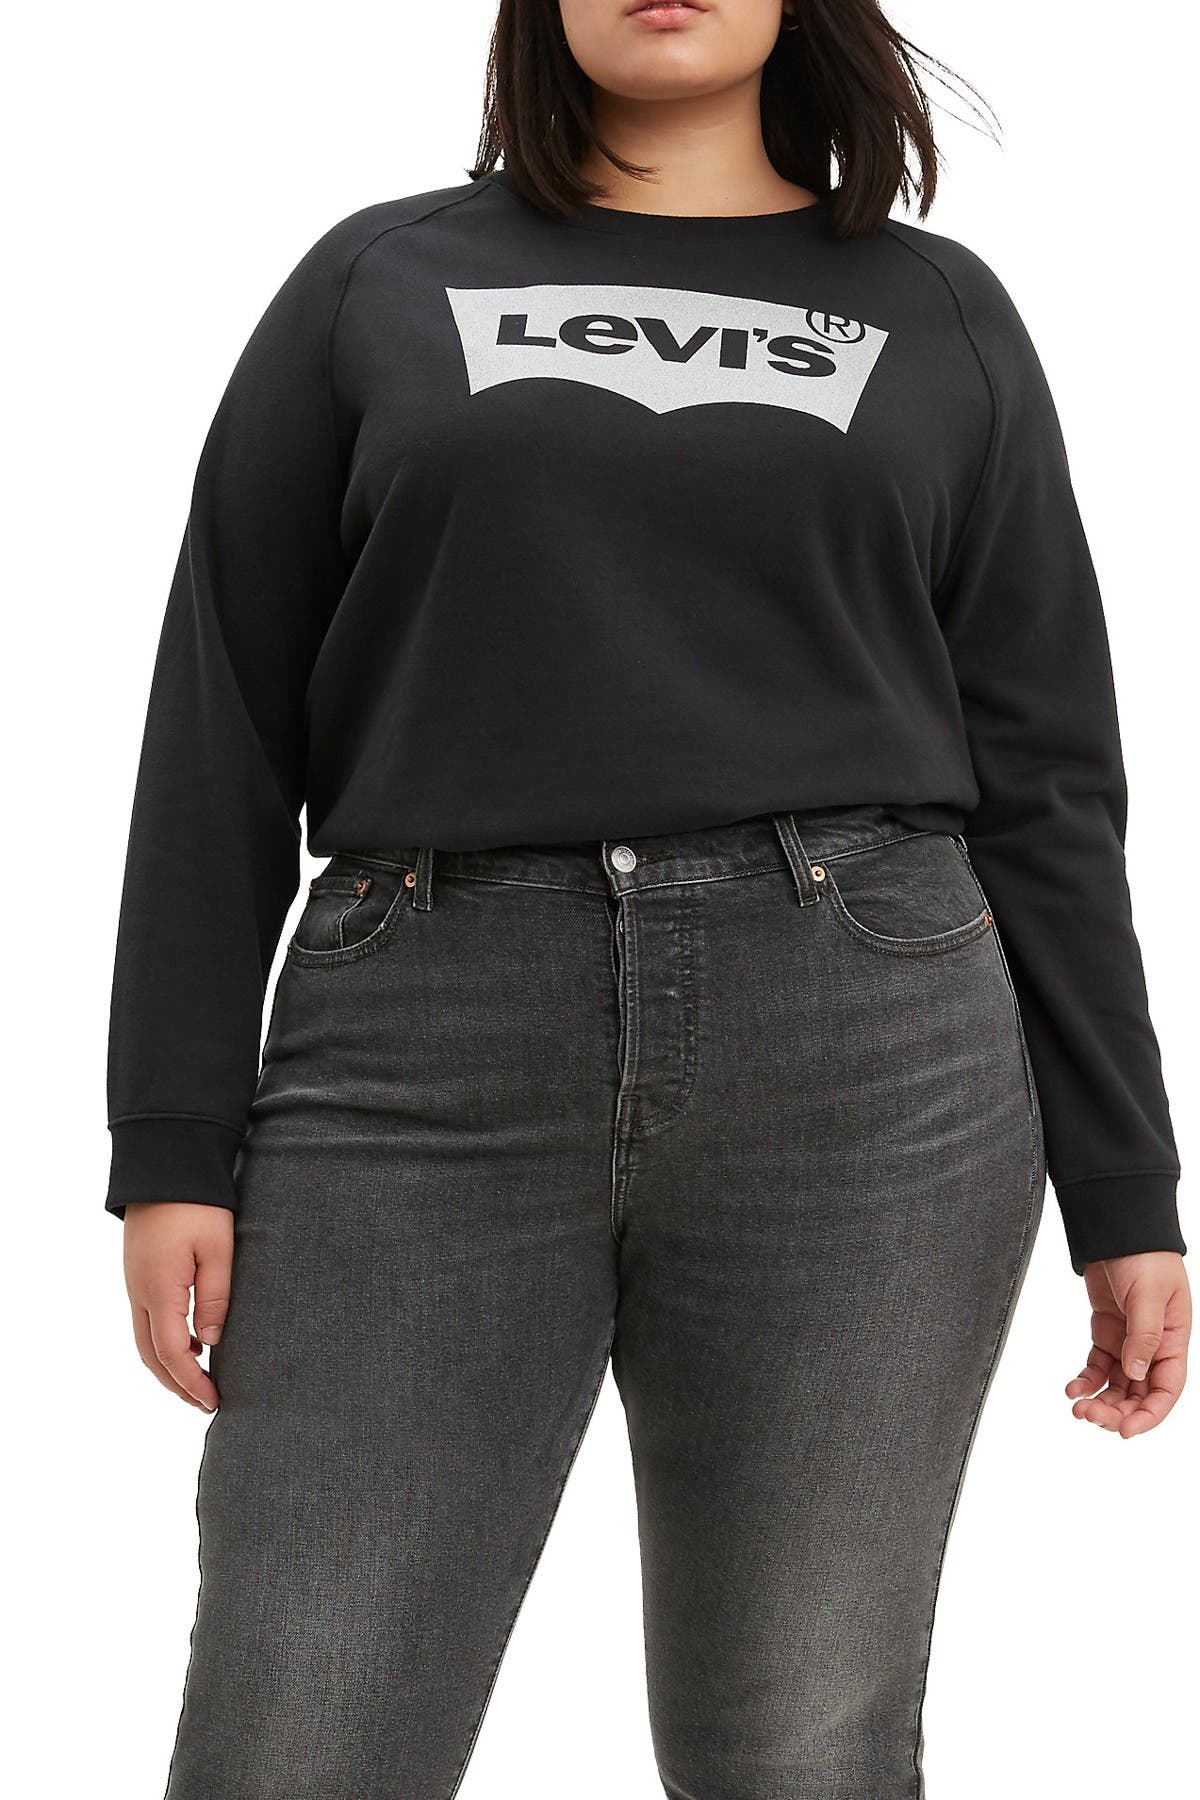 levis sweater womens